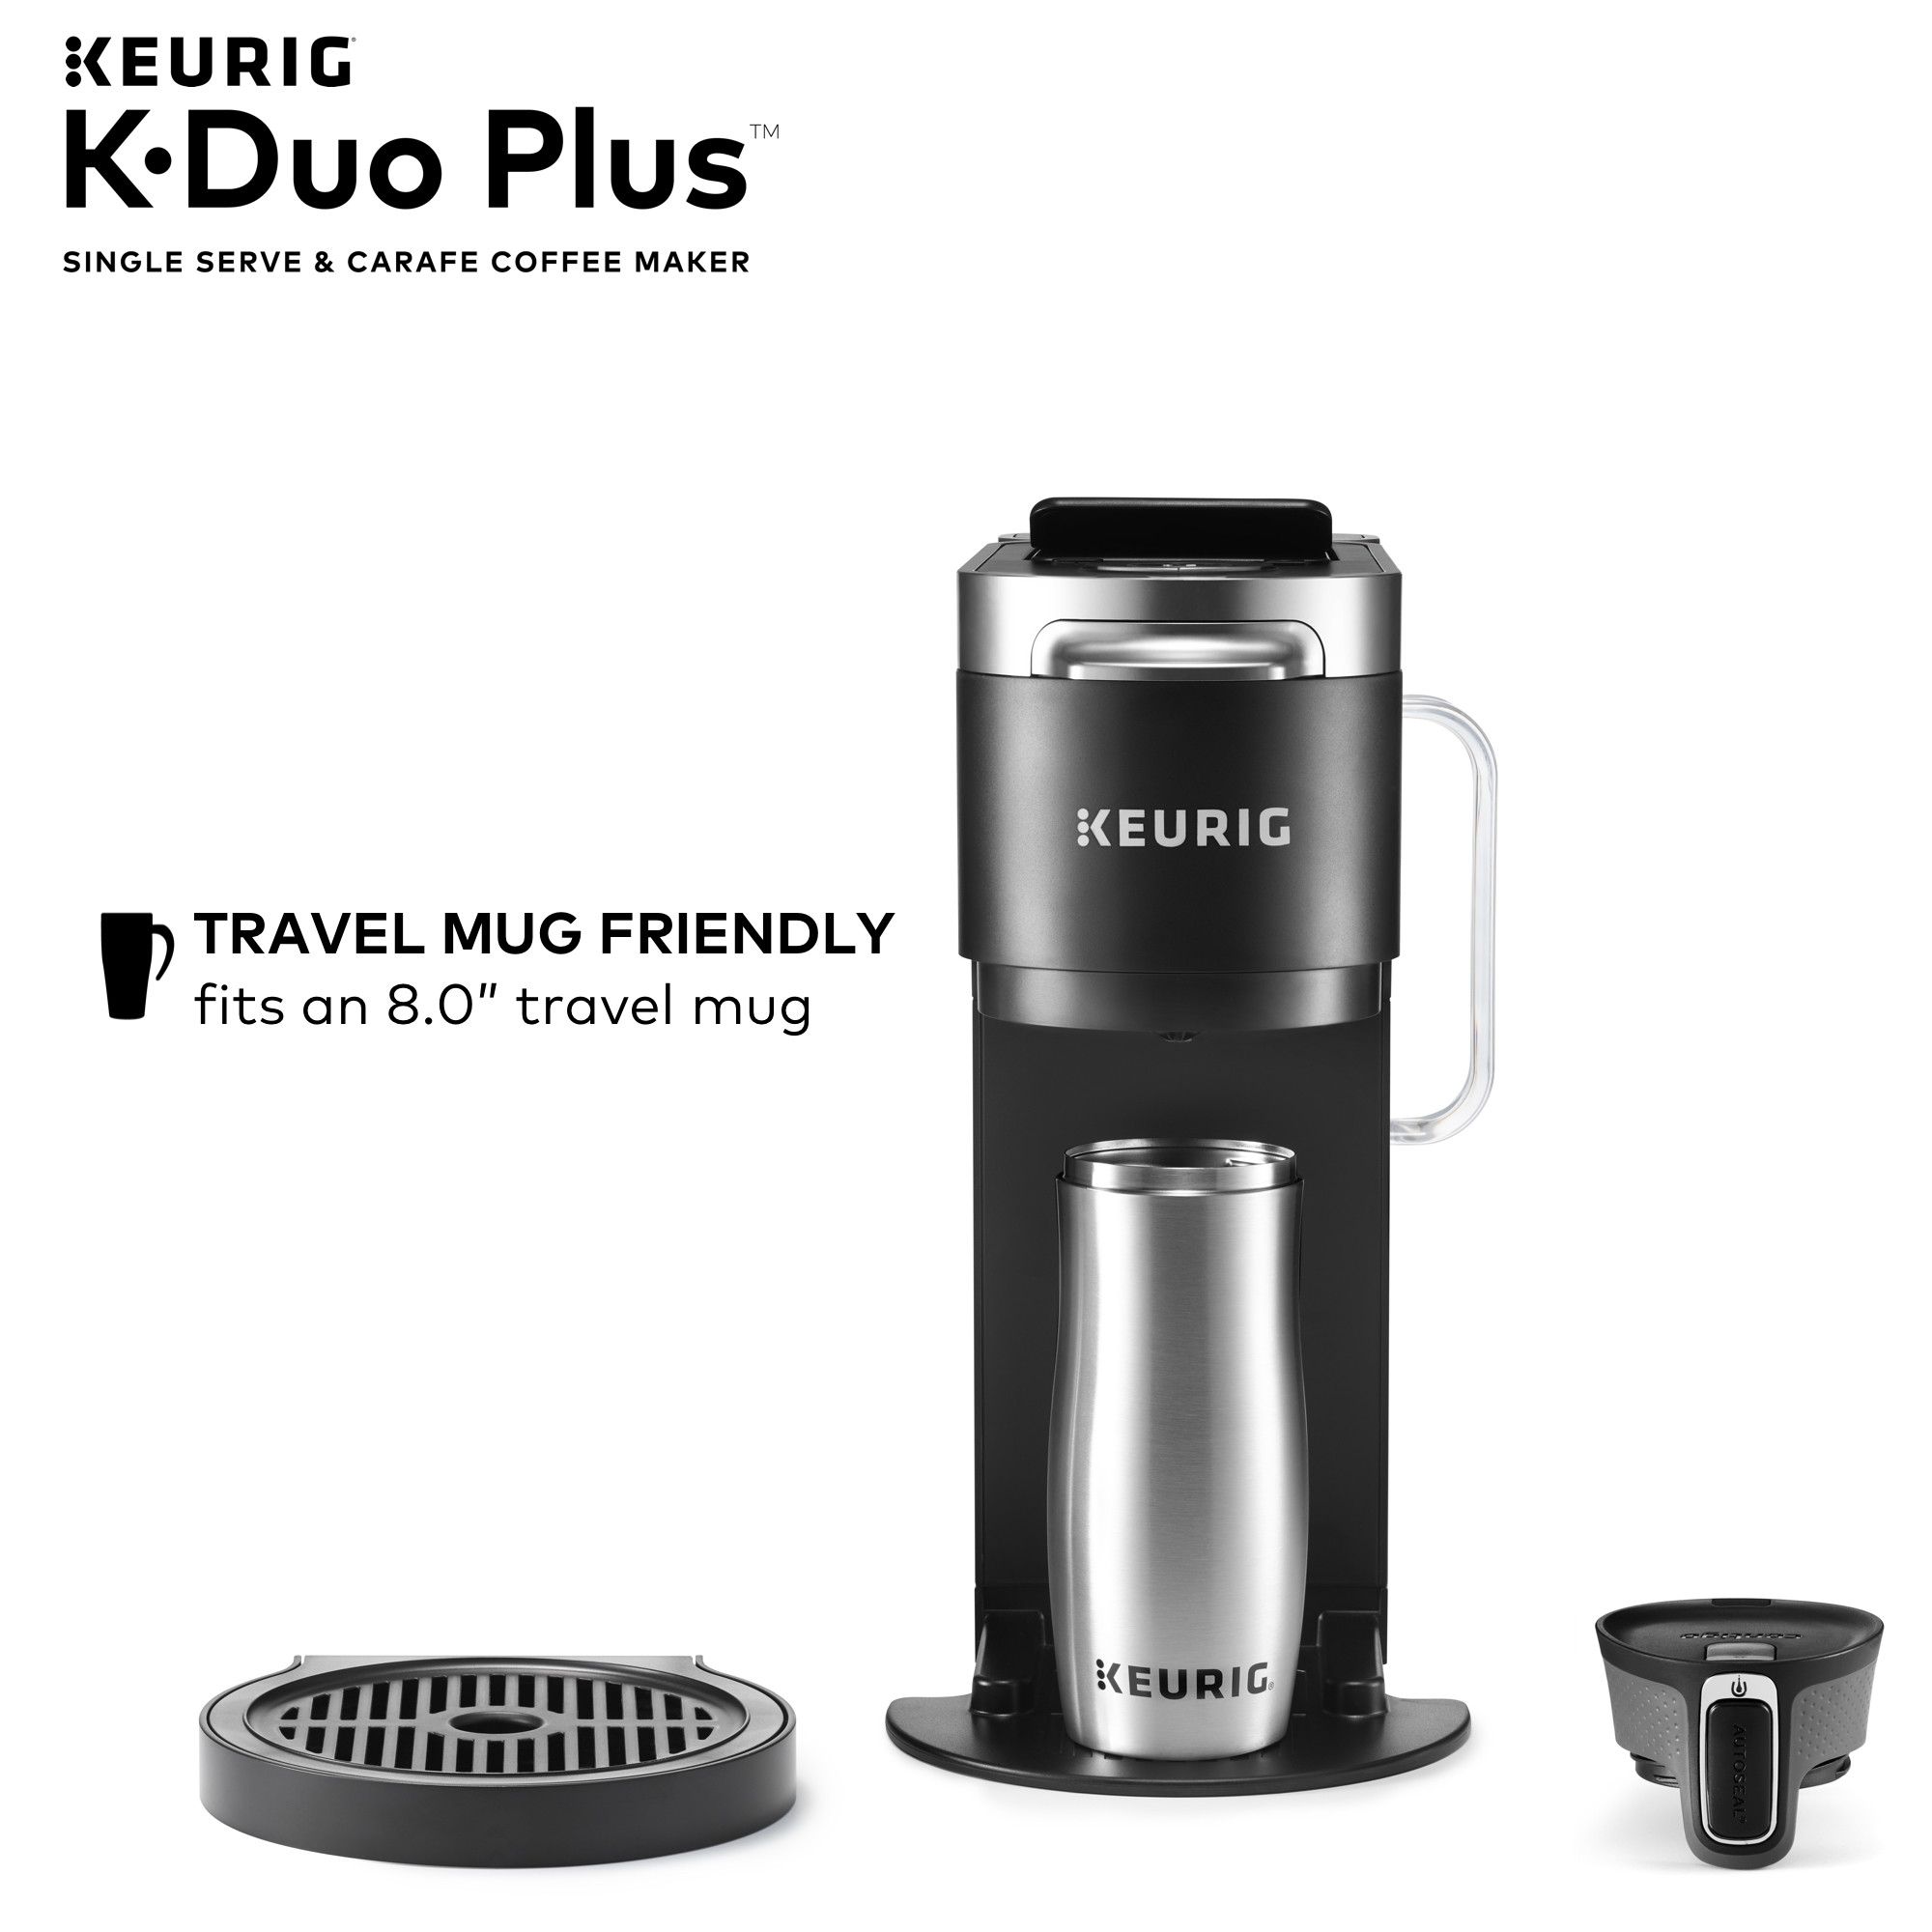 Keurig K-Duo Plus Single Serve & Carafe Coffee Maker - image 14 of 24